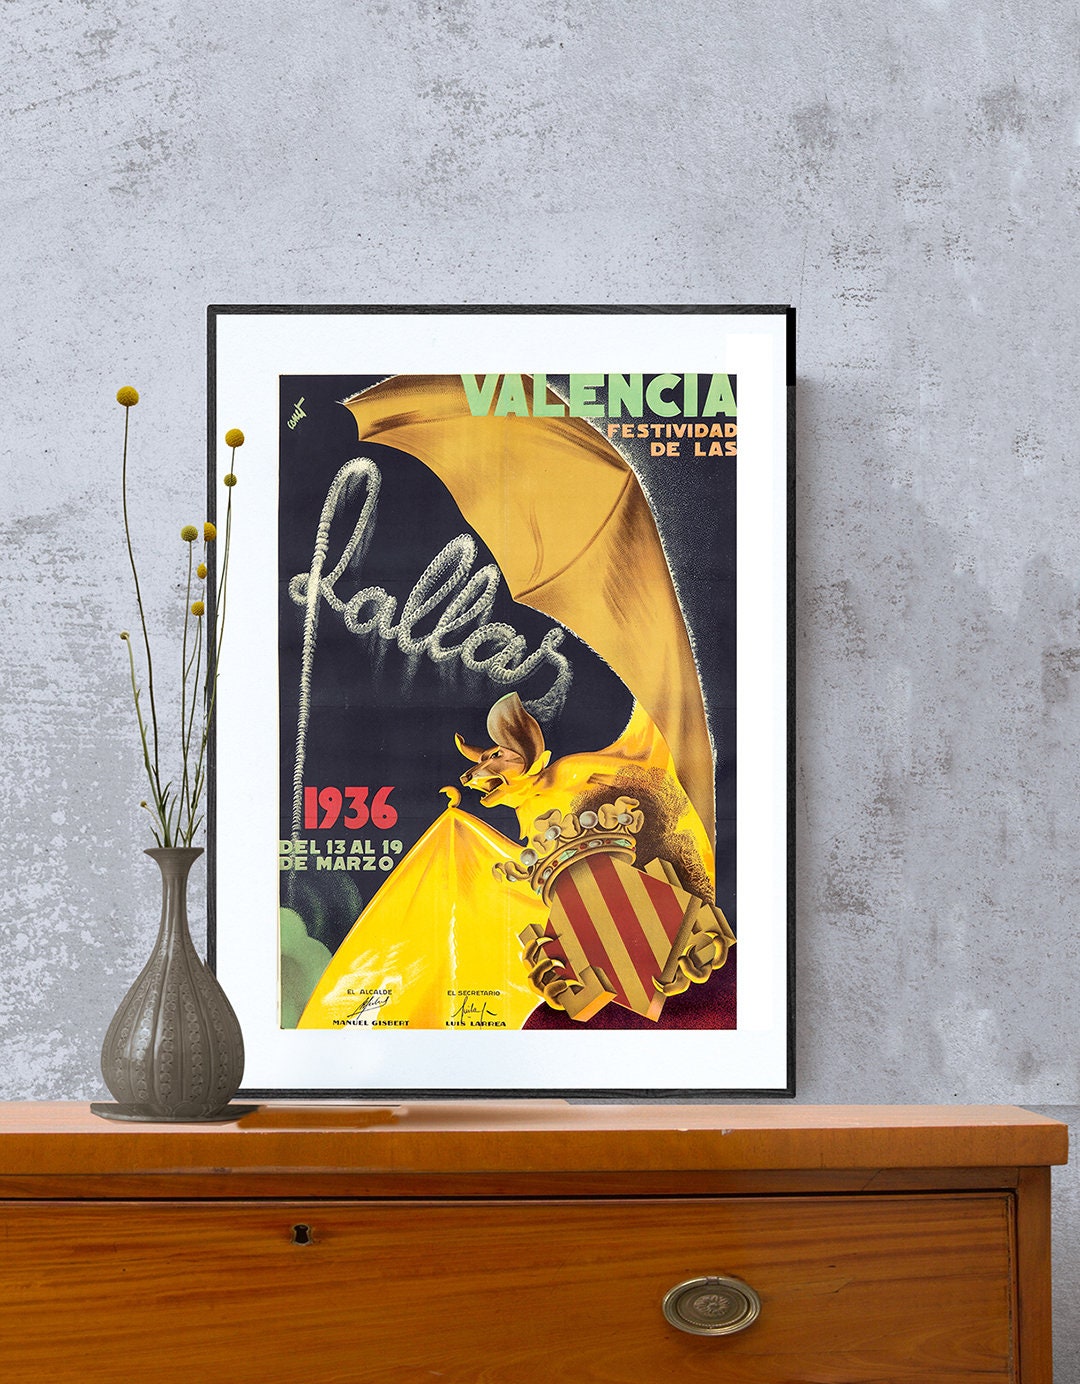 Valencia Festividad de Las Fallas Vintage Travel Poster - Poster Print or Canvas Print  Gift Idea  Wall Decor